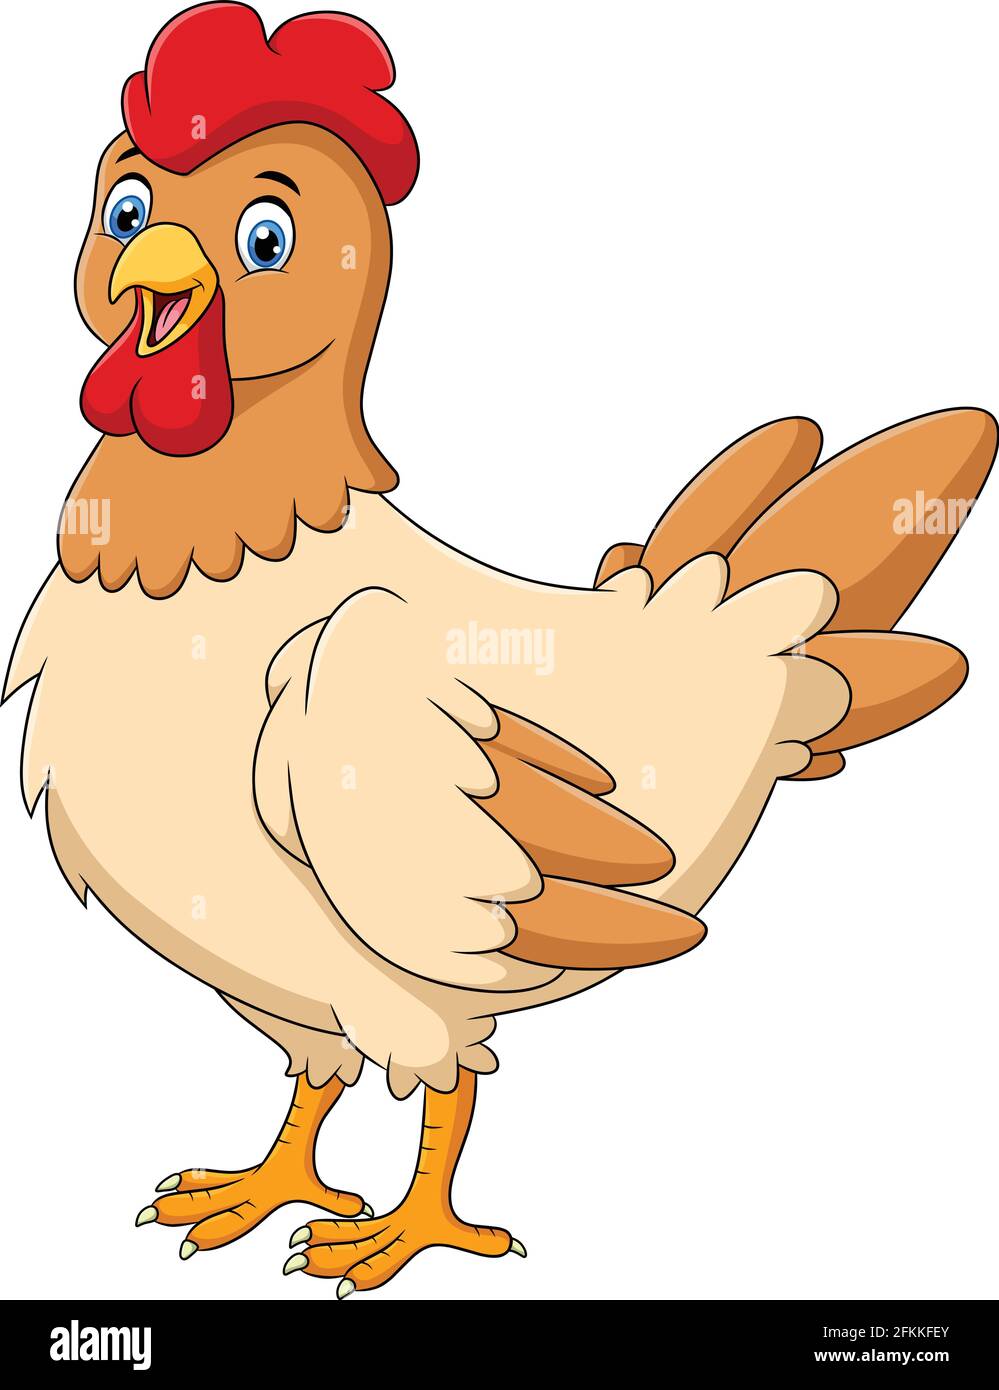 Illustration of Cute Hen Cartoon Stock Illustration - Illustration